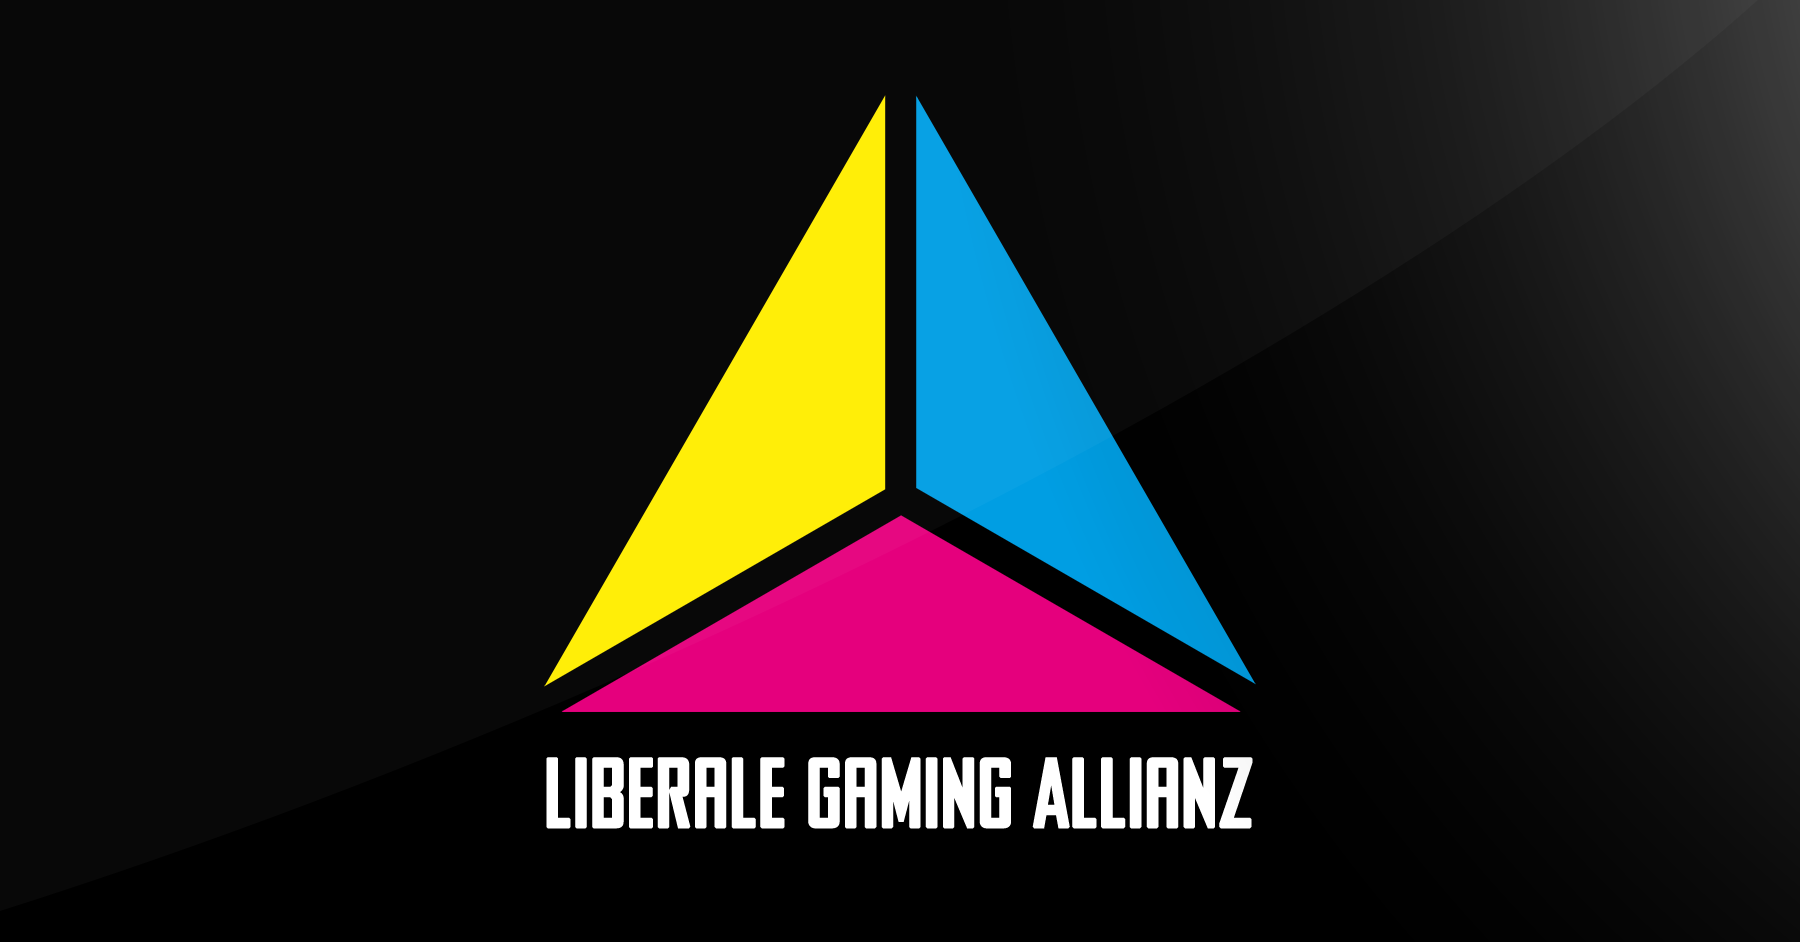 Webseiten-Banner der Liberalen Gaming Allianz